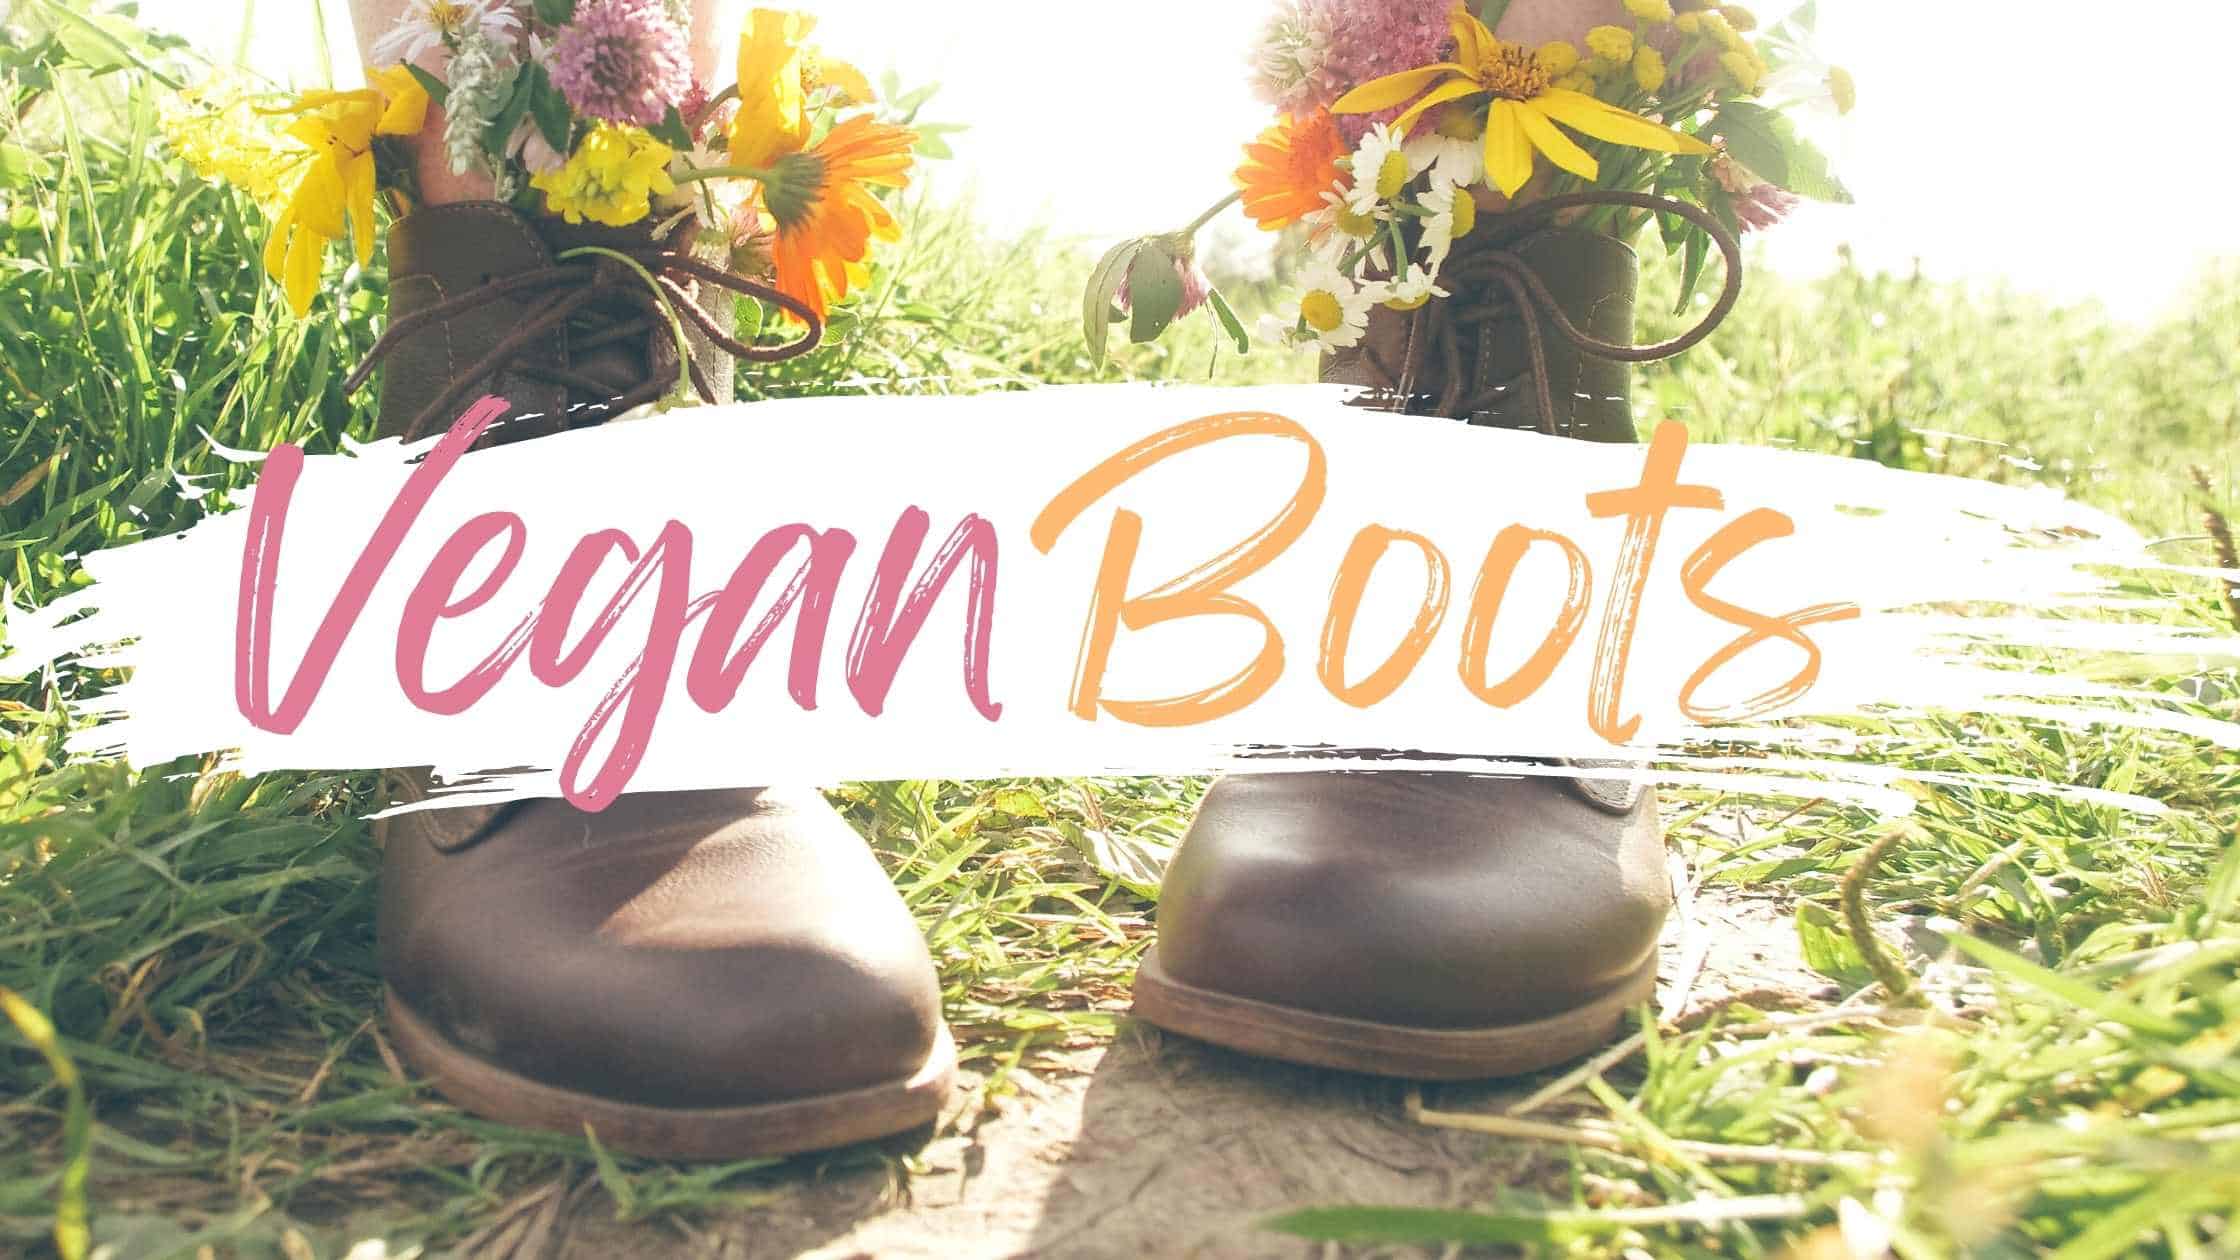 Vegan boots guide.